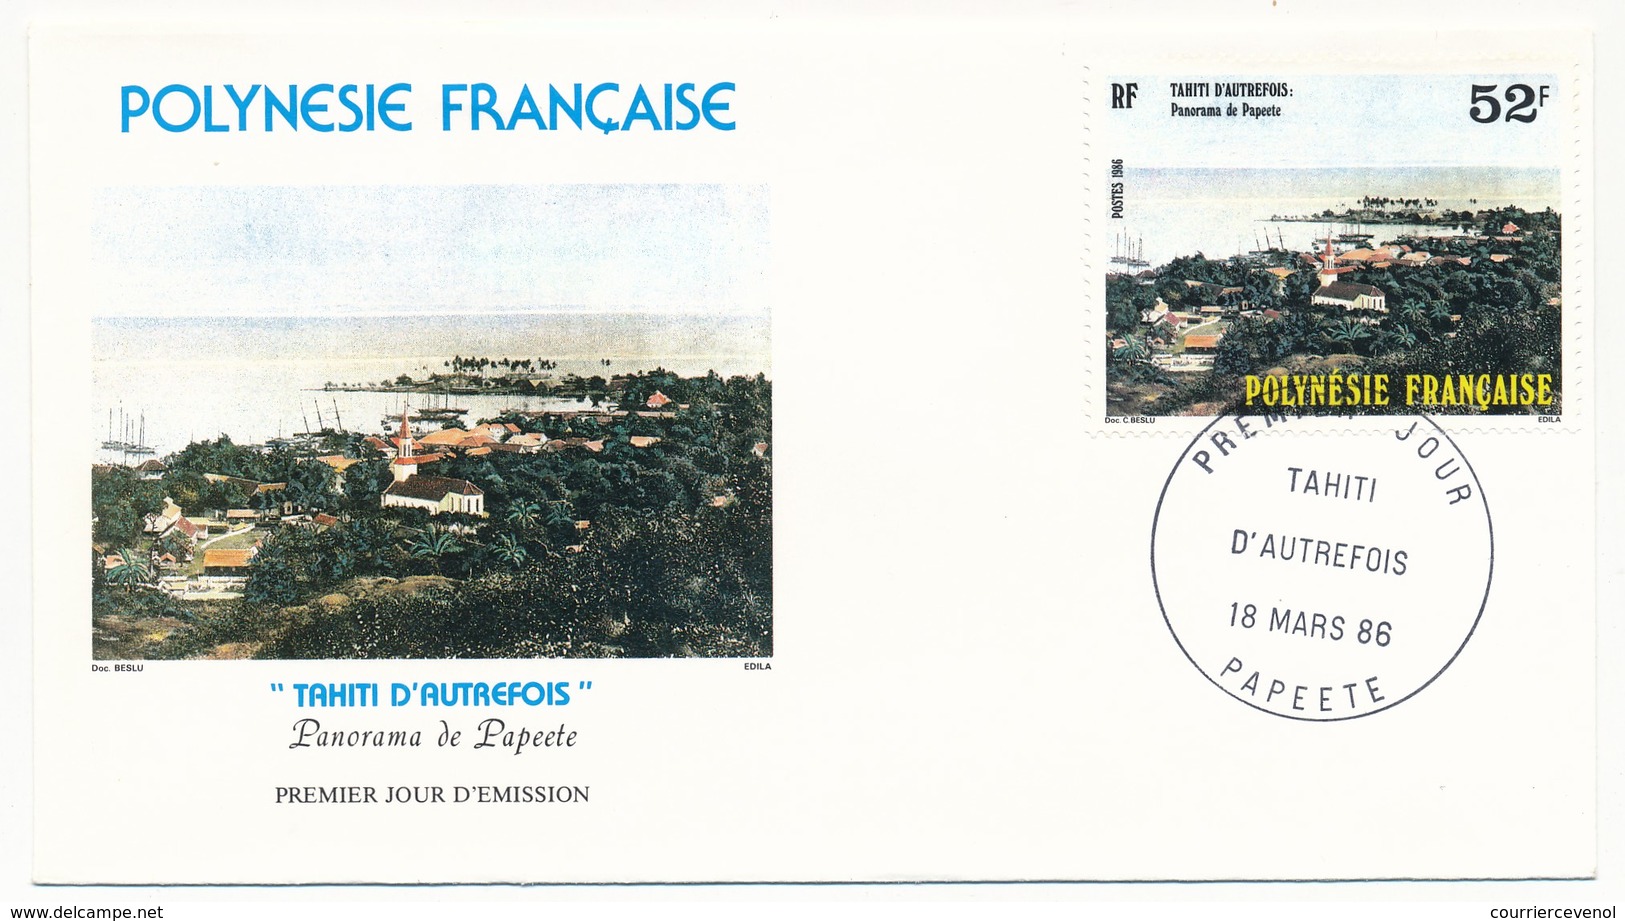 POLYNESIE FRANCAISE - 3 FDC - Tahiti D'Autrefois - 18 Mars 1986 - Papeete - FDC